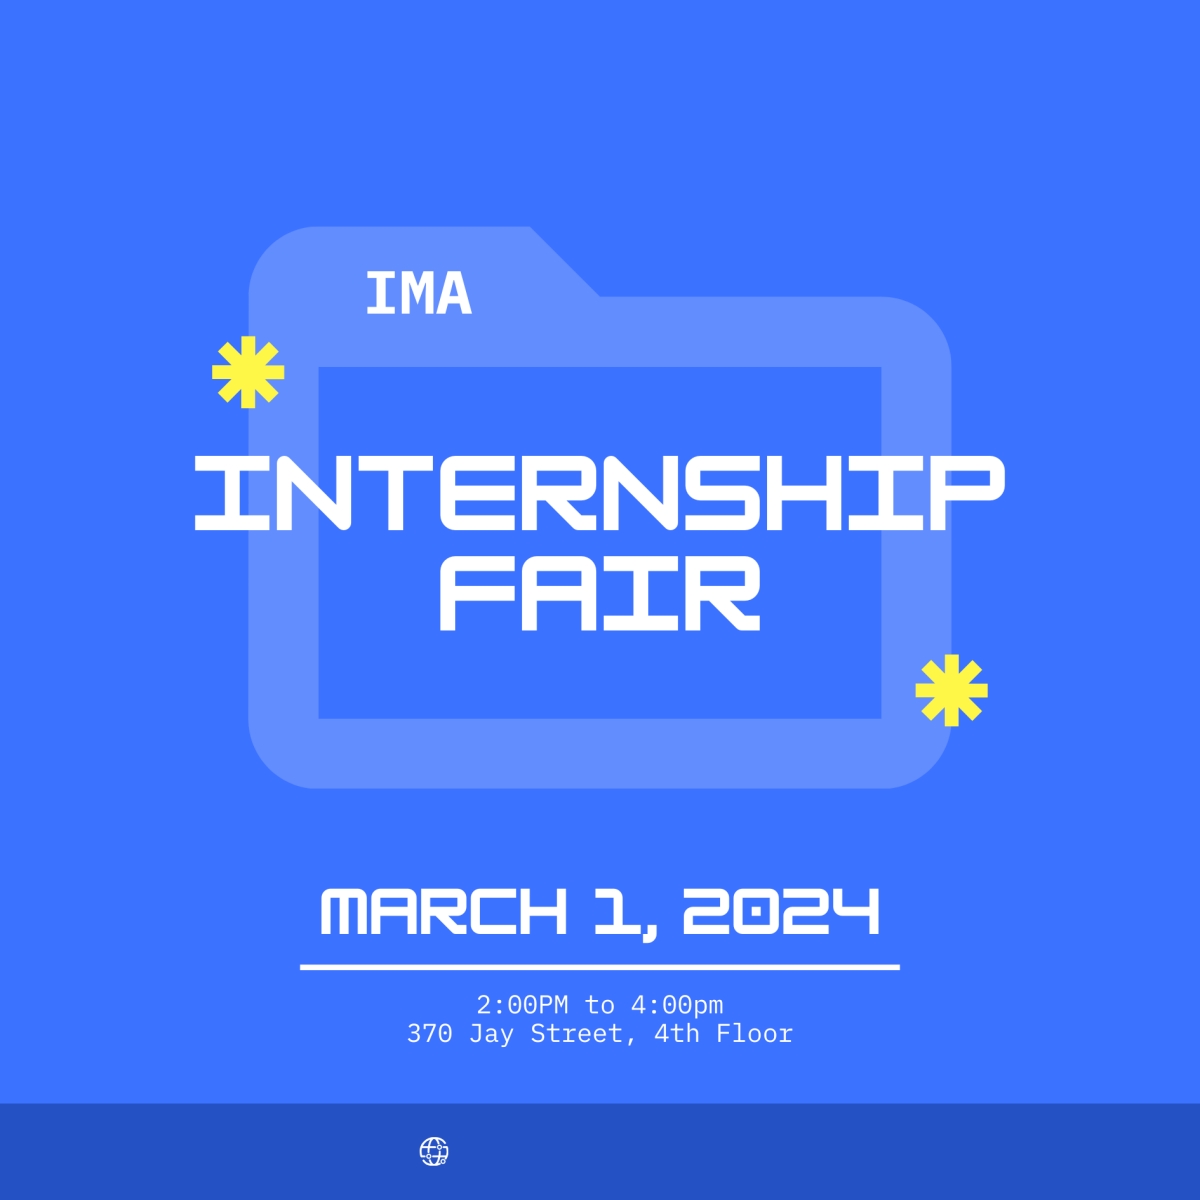 IMA Internship Fair. March 1, 2024. 2:00pm - 4:00pm. 370 Jay Street, Room 4th Floor.